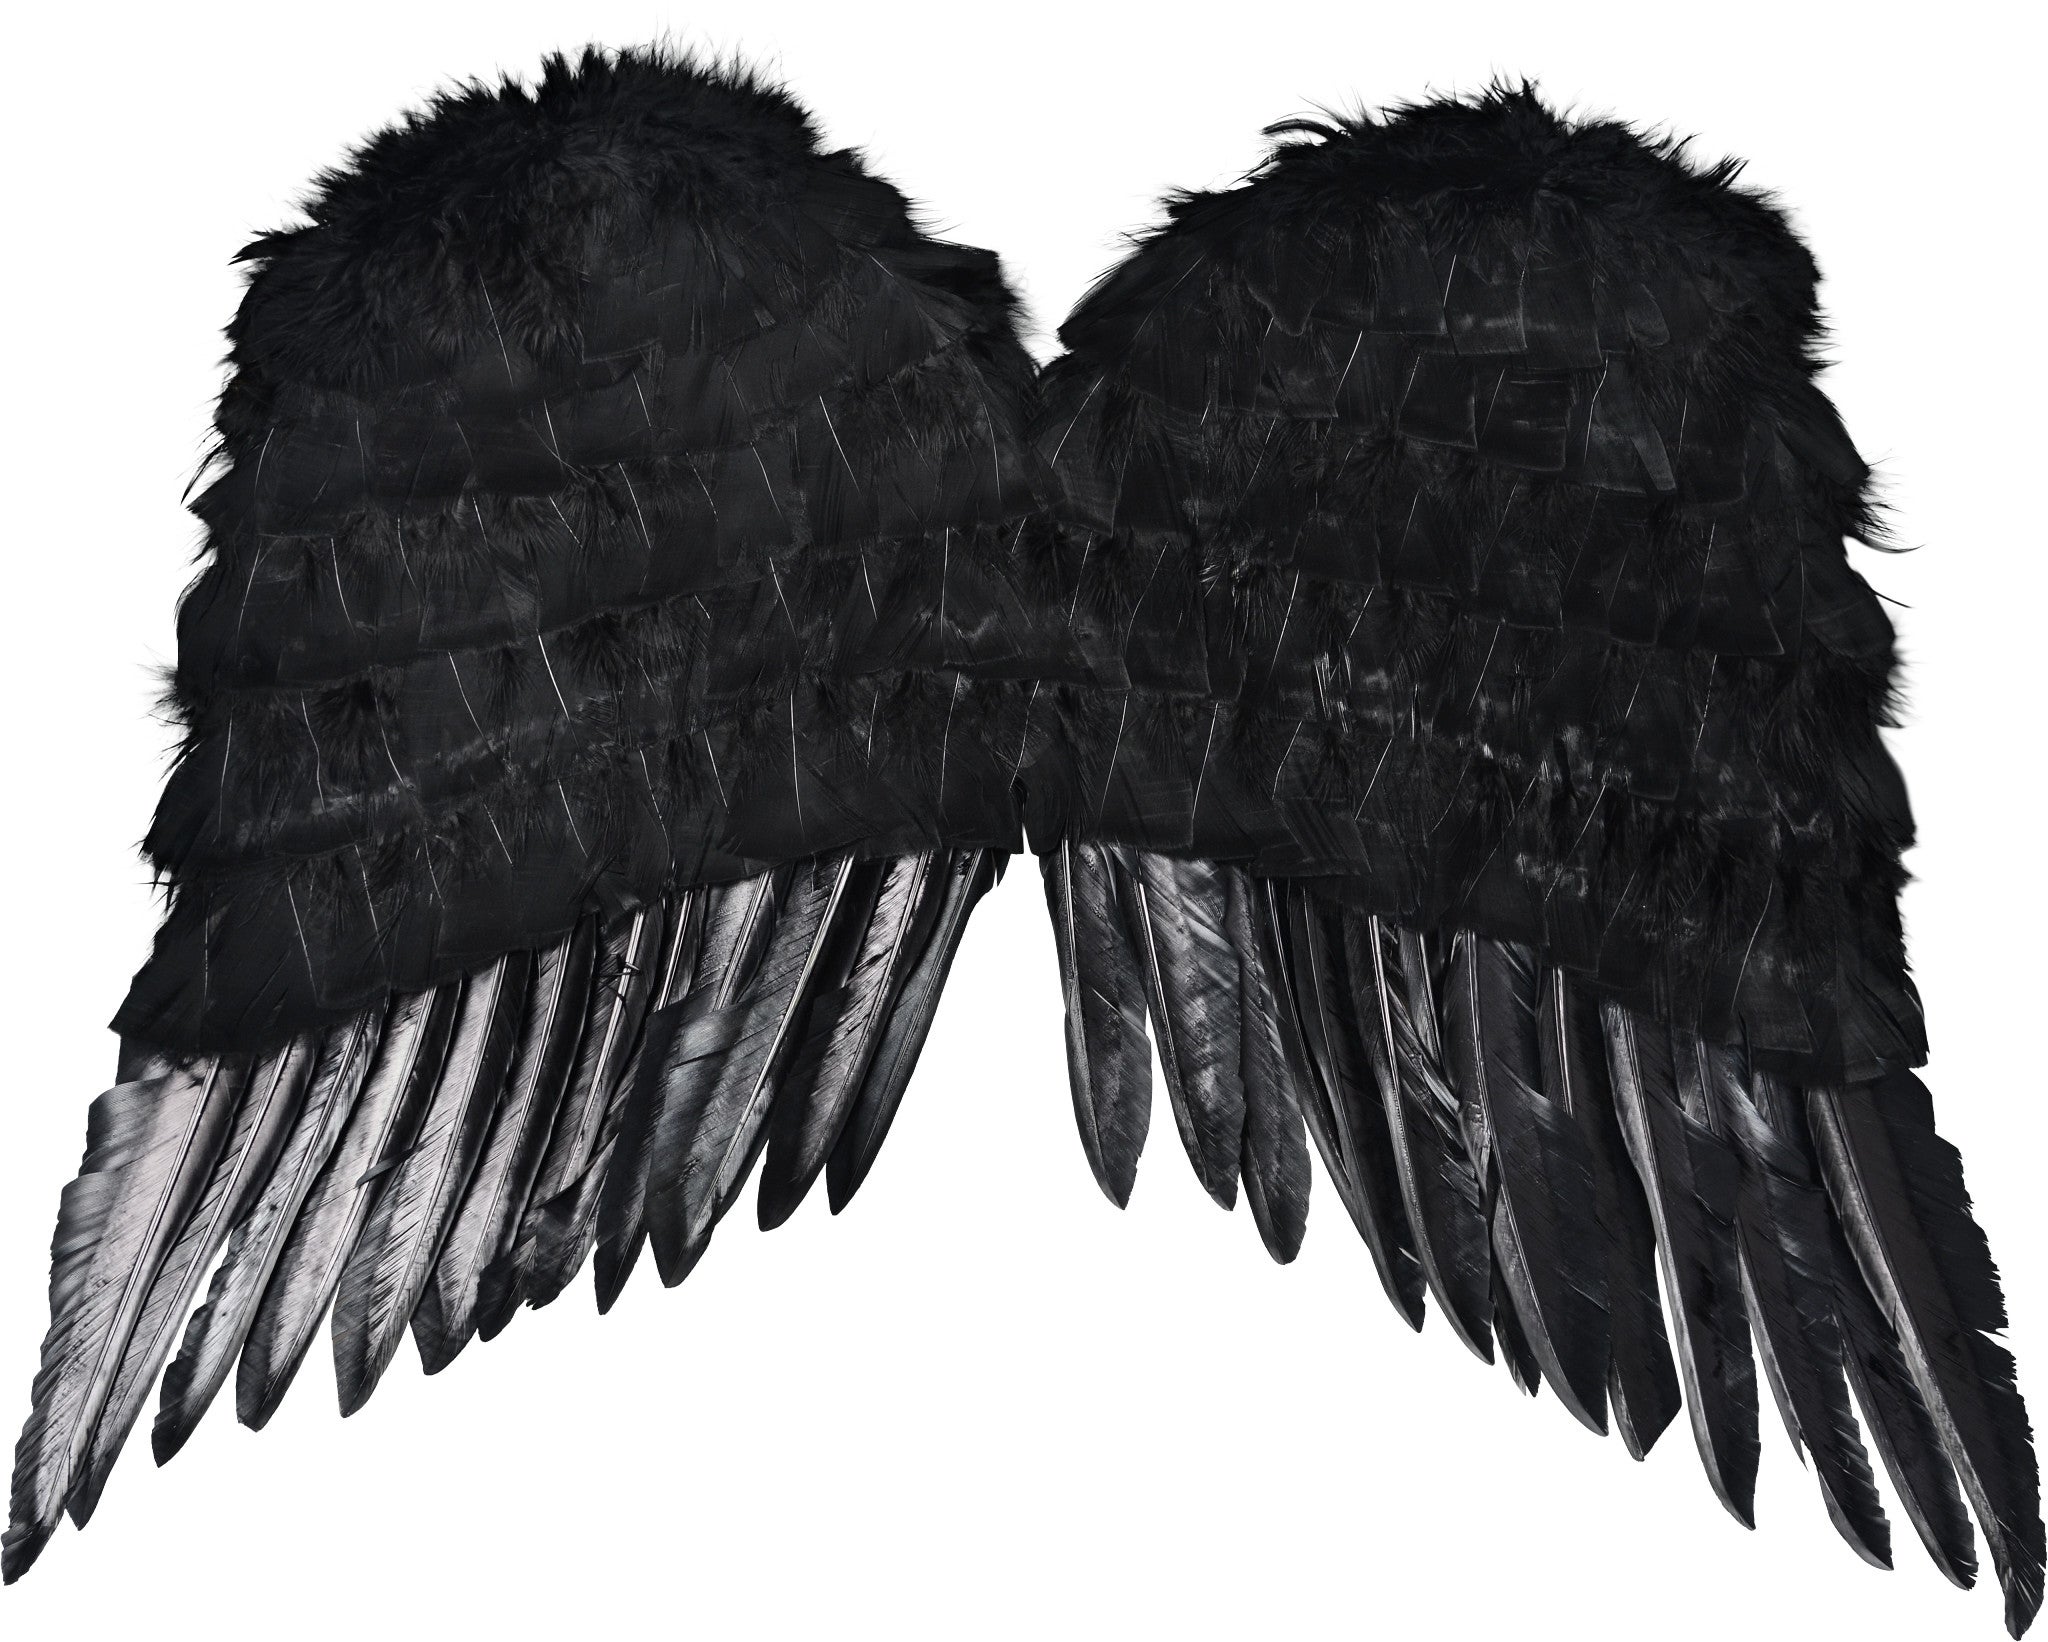 Black wings accessory